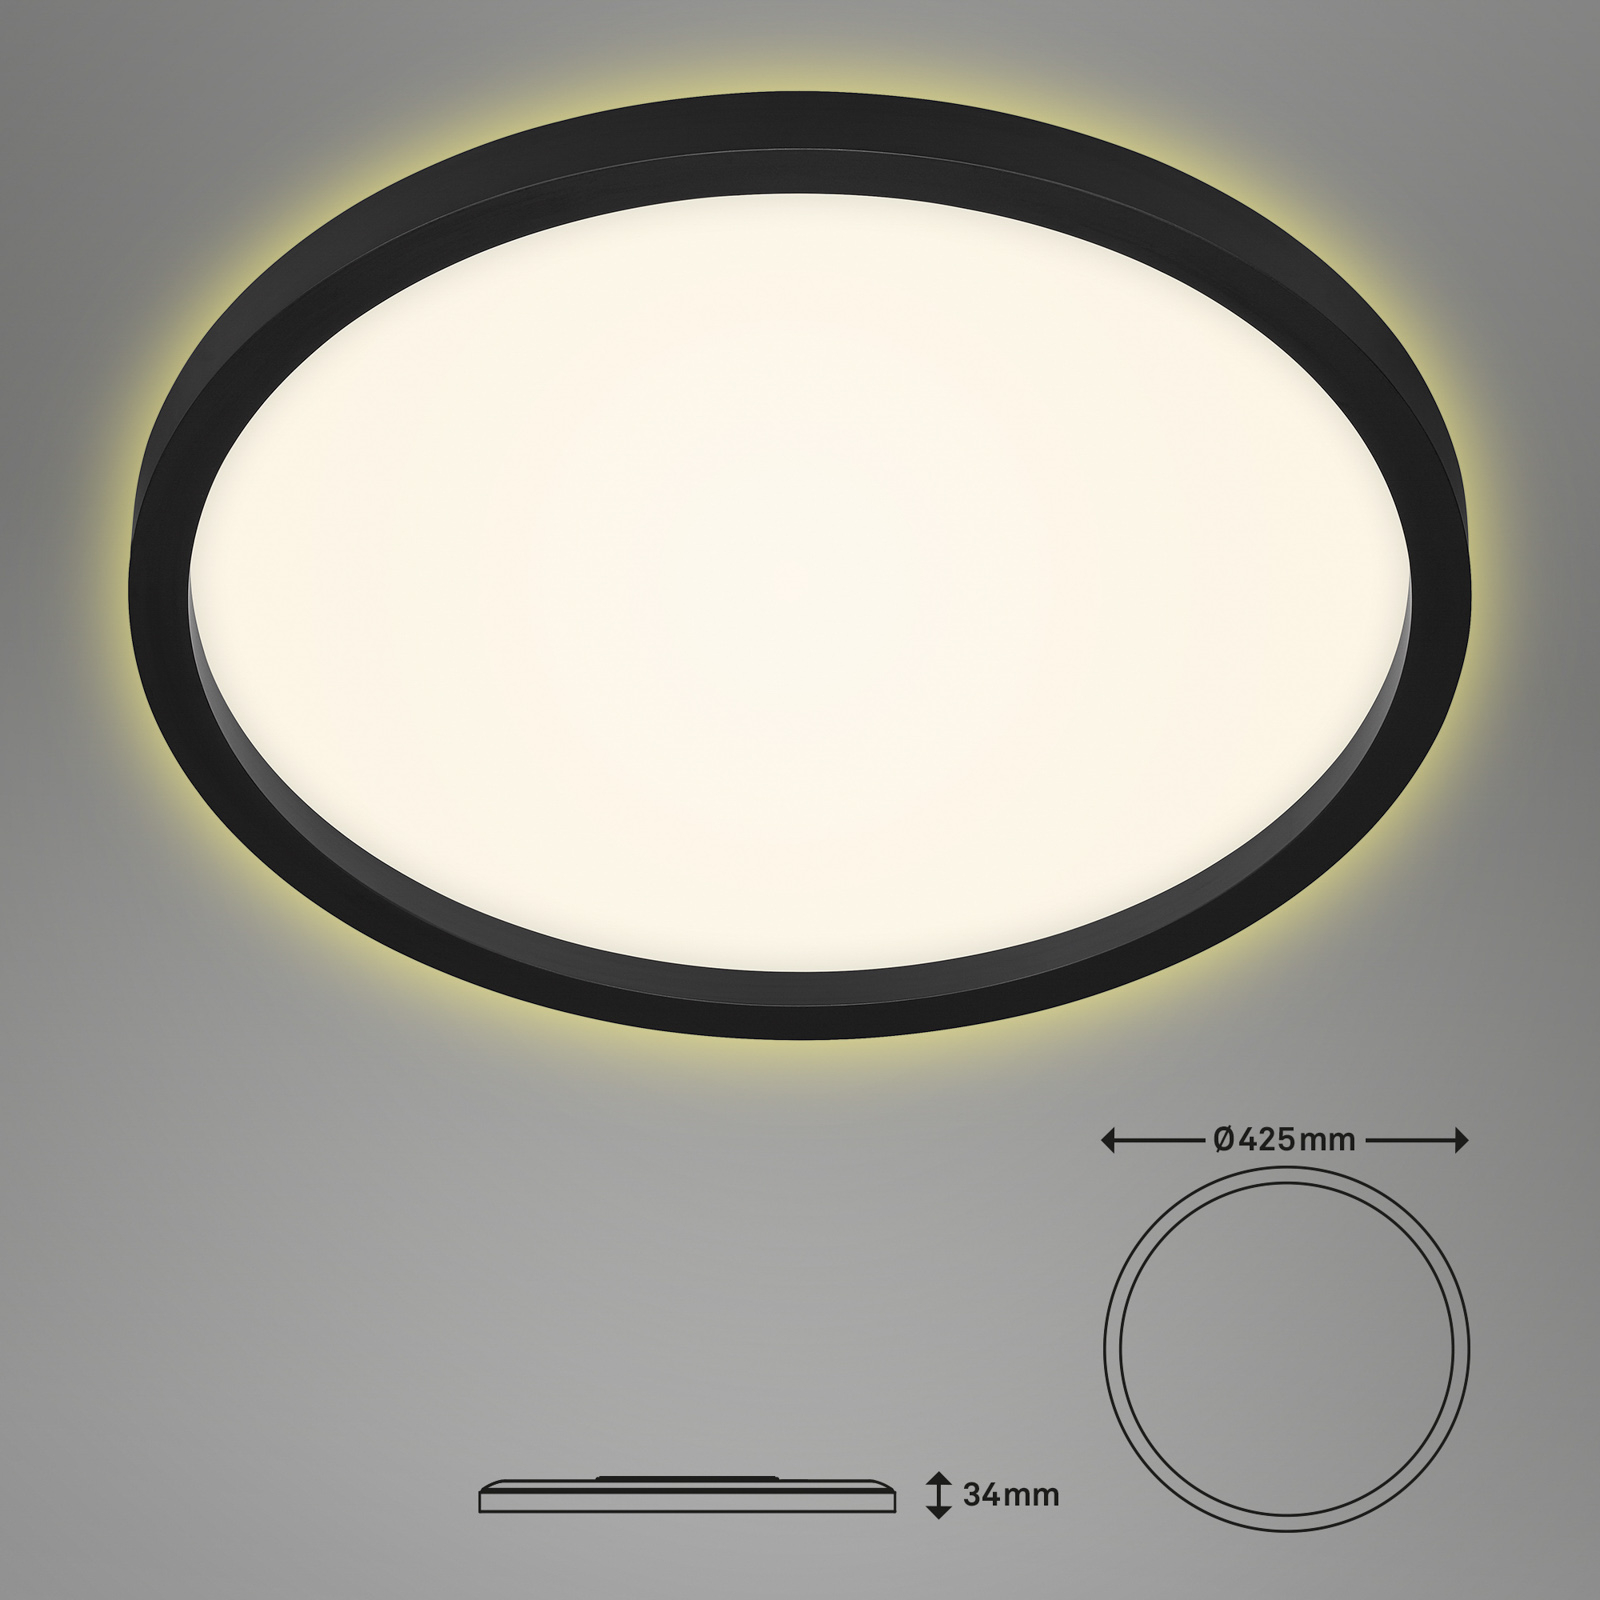 LED plafondlamp 7363, Ø 42 cm, zwart